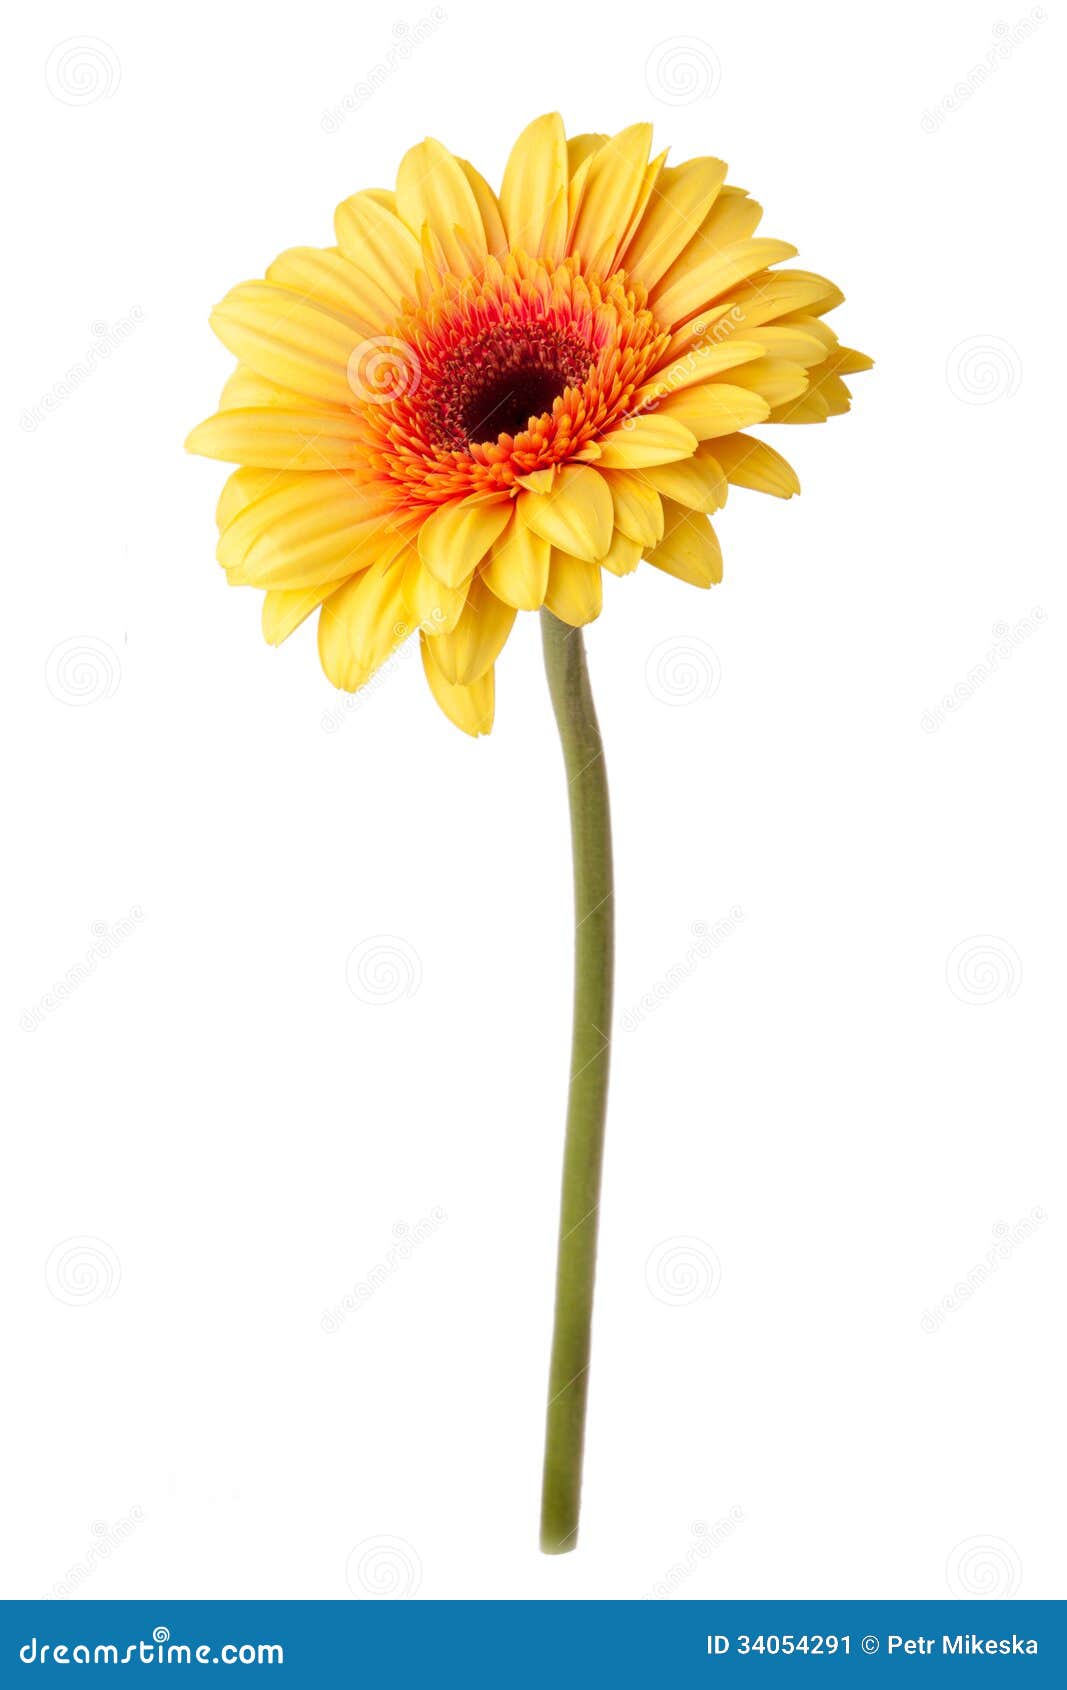 yellow daisy flower  on white